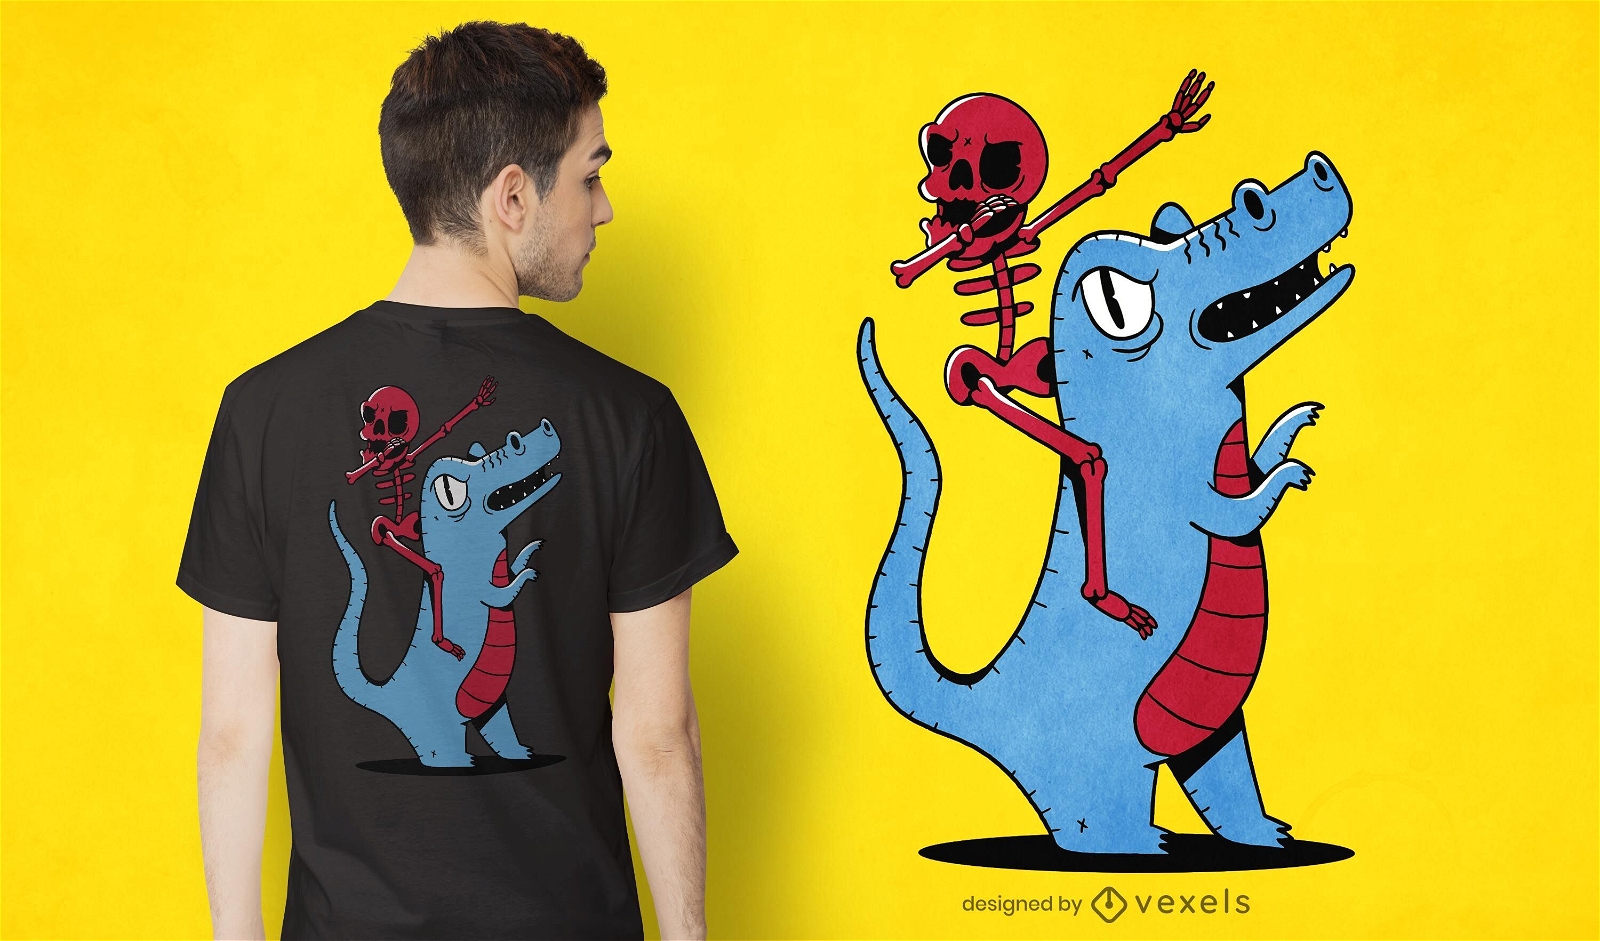 Skeleton riding dinosaur t-shirt design